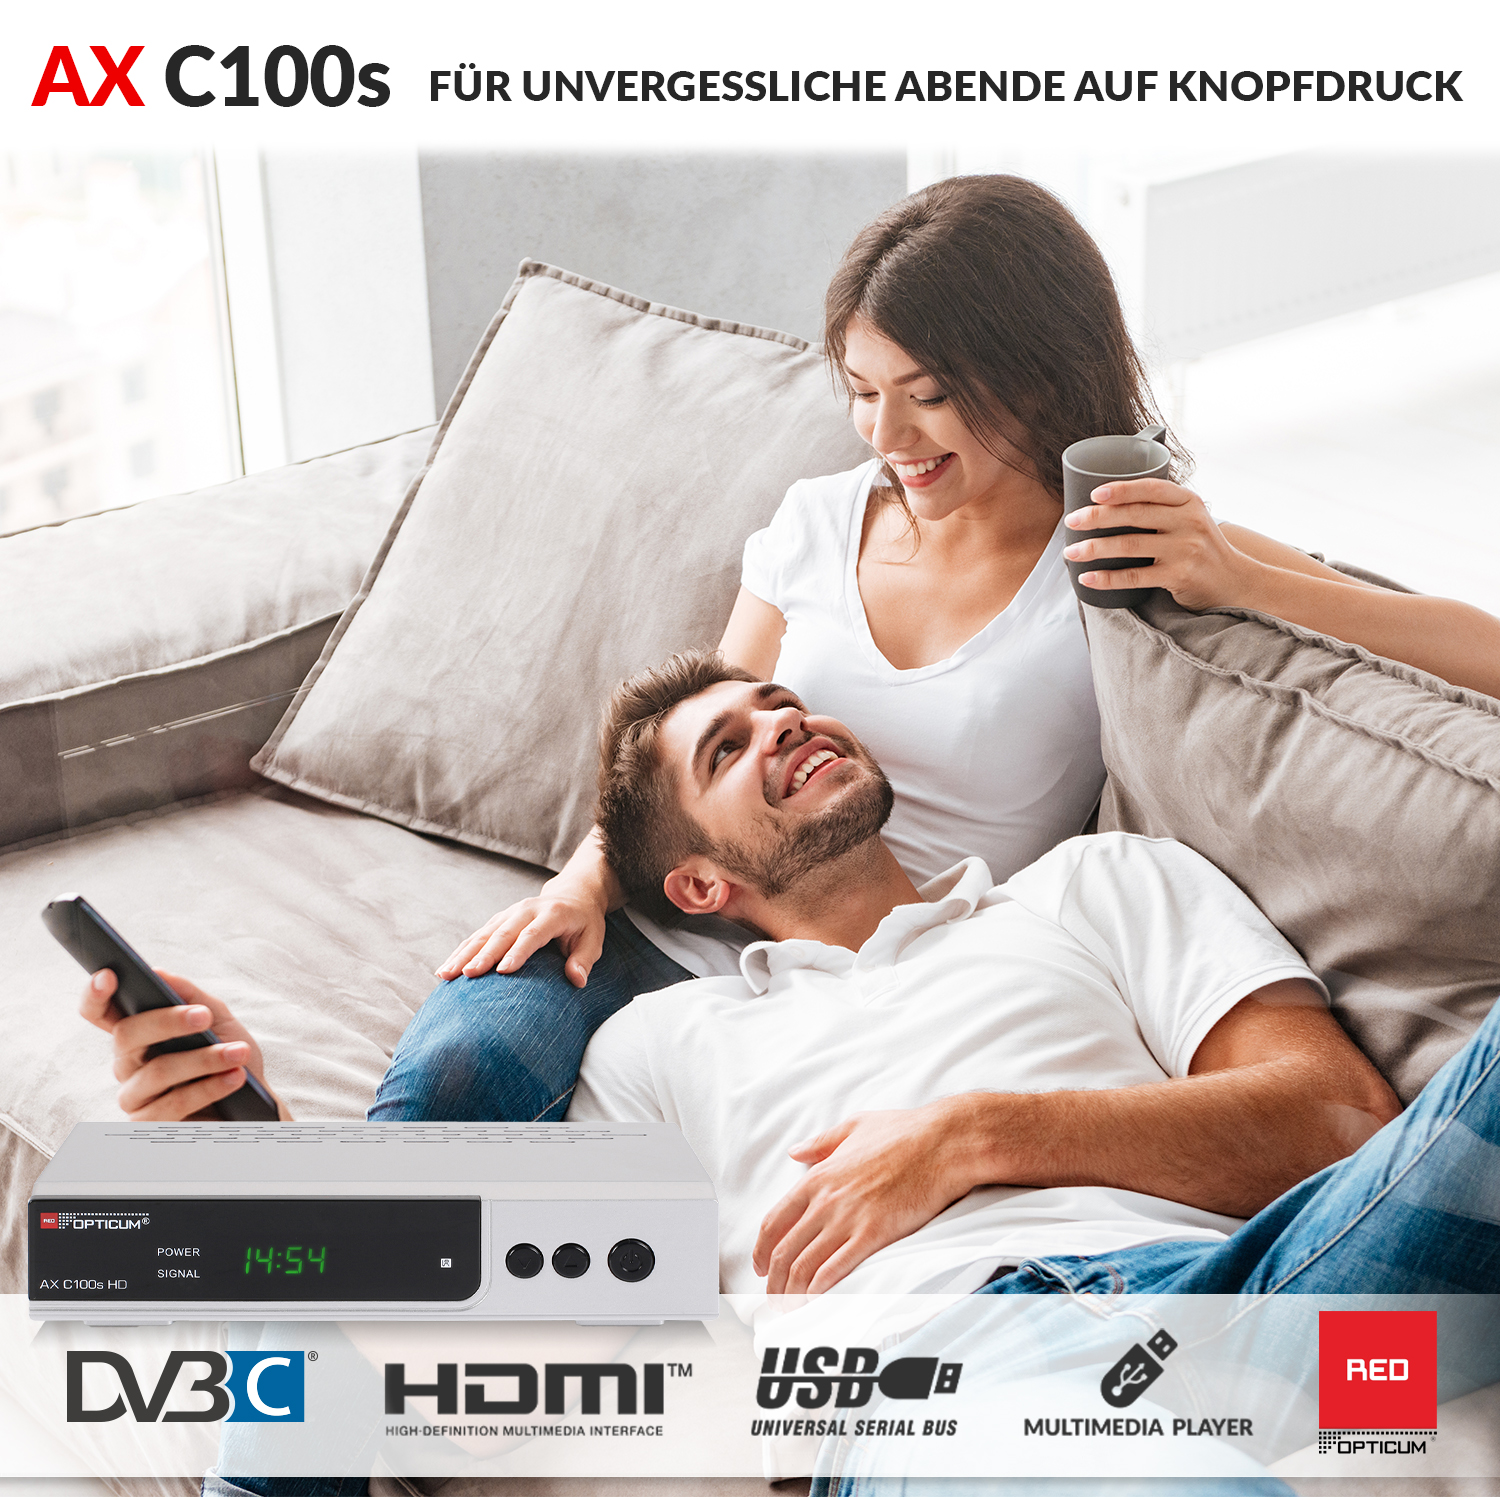 RED OPTICUM AX C100s HD Digitaler DVB-C (HDTV, DVB-C2, silber) DVB-C, Kabel-Receiver PVR-Funktion, Kabelreceiver Receiver I HD-EPG-HDMI-USB-SCART PVR-Aufnahmefunktion mit